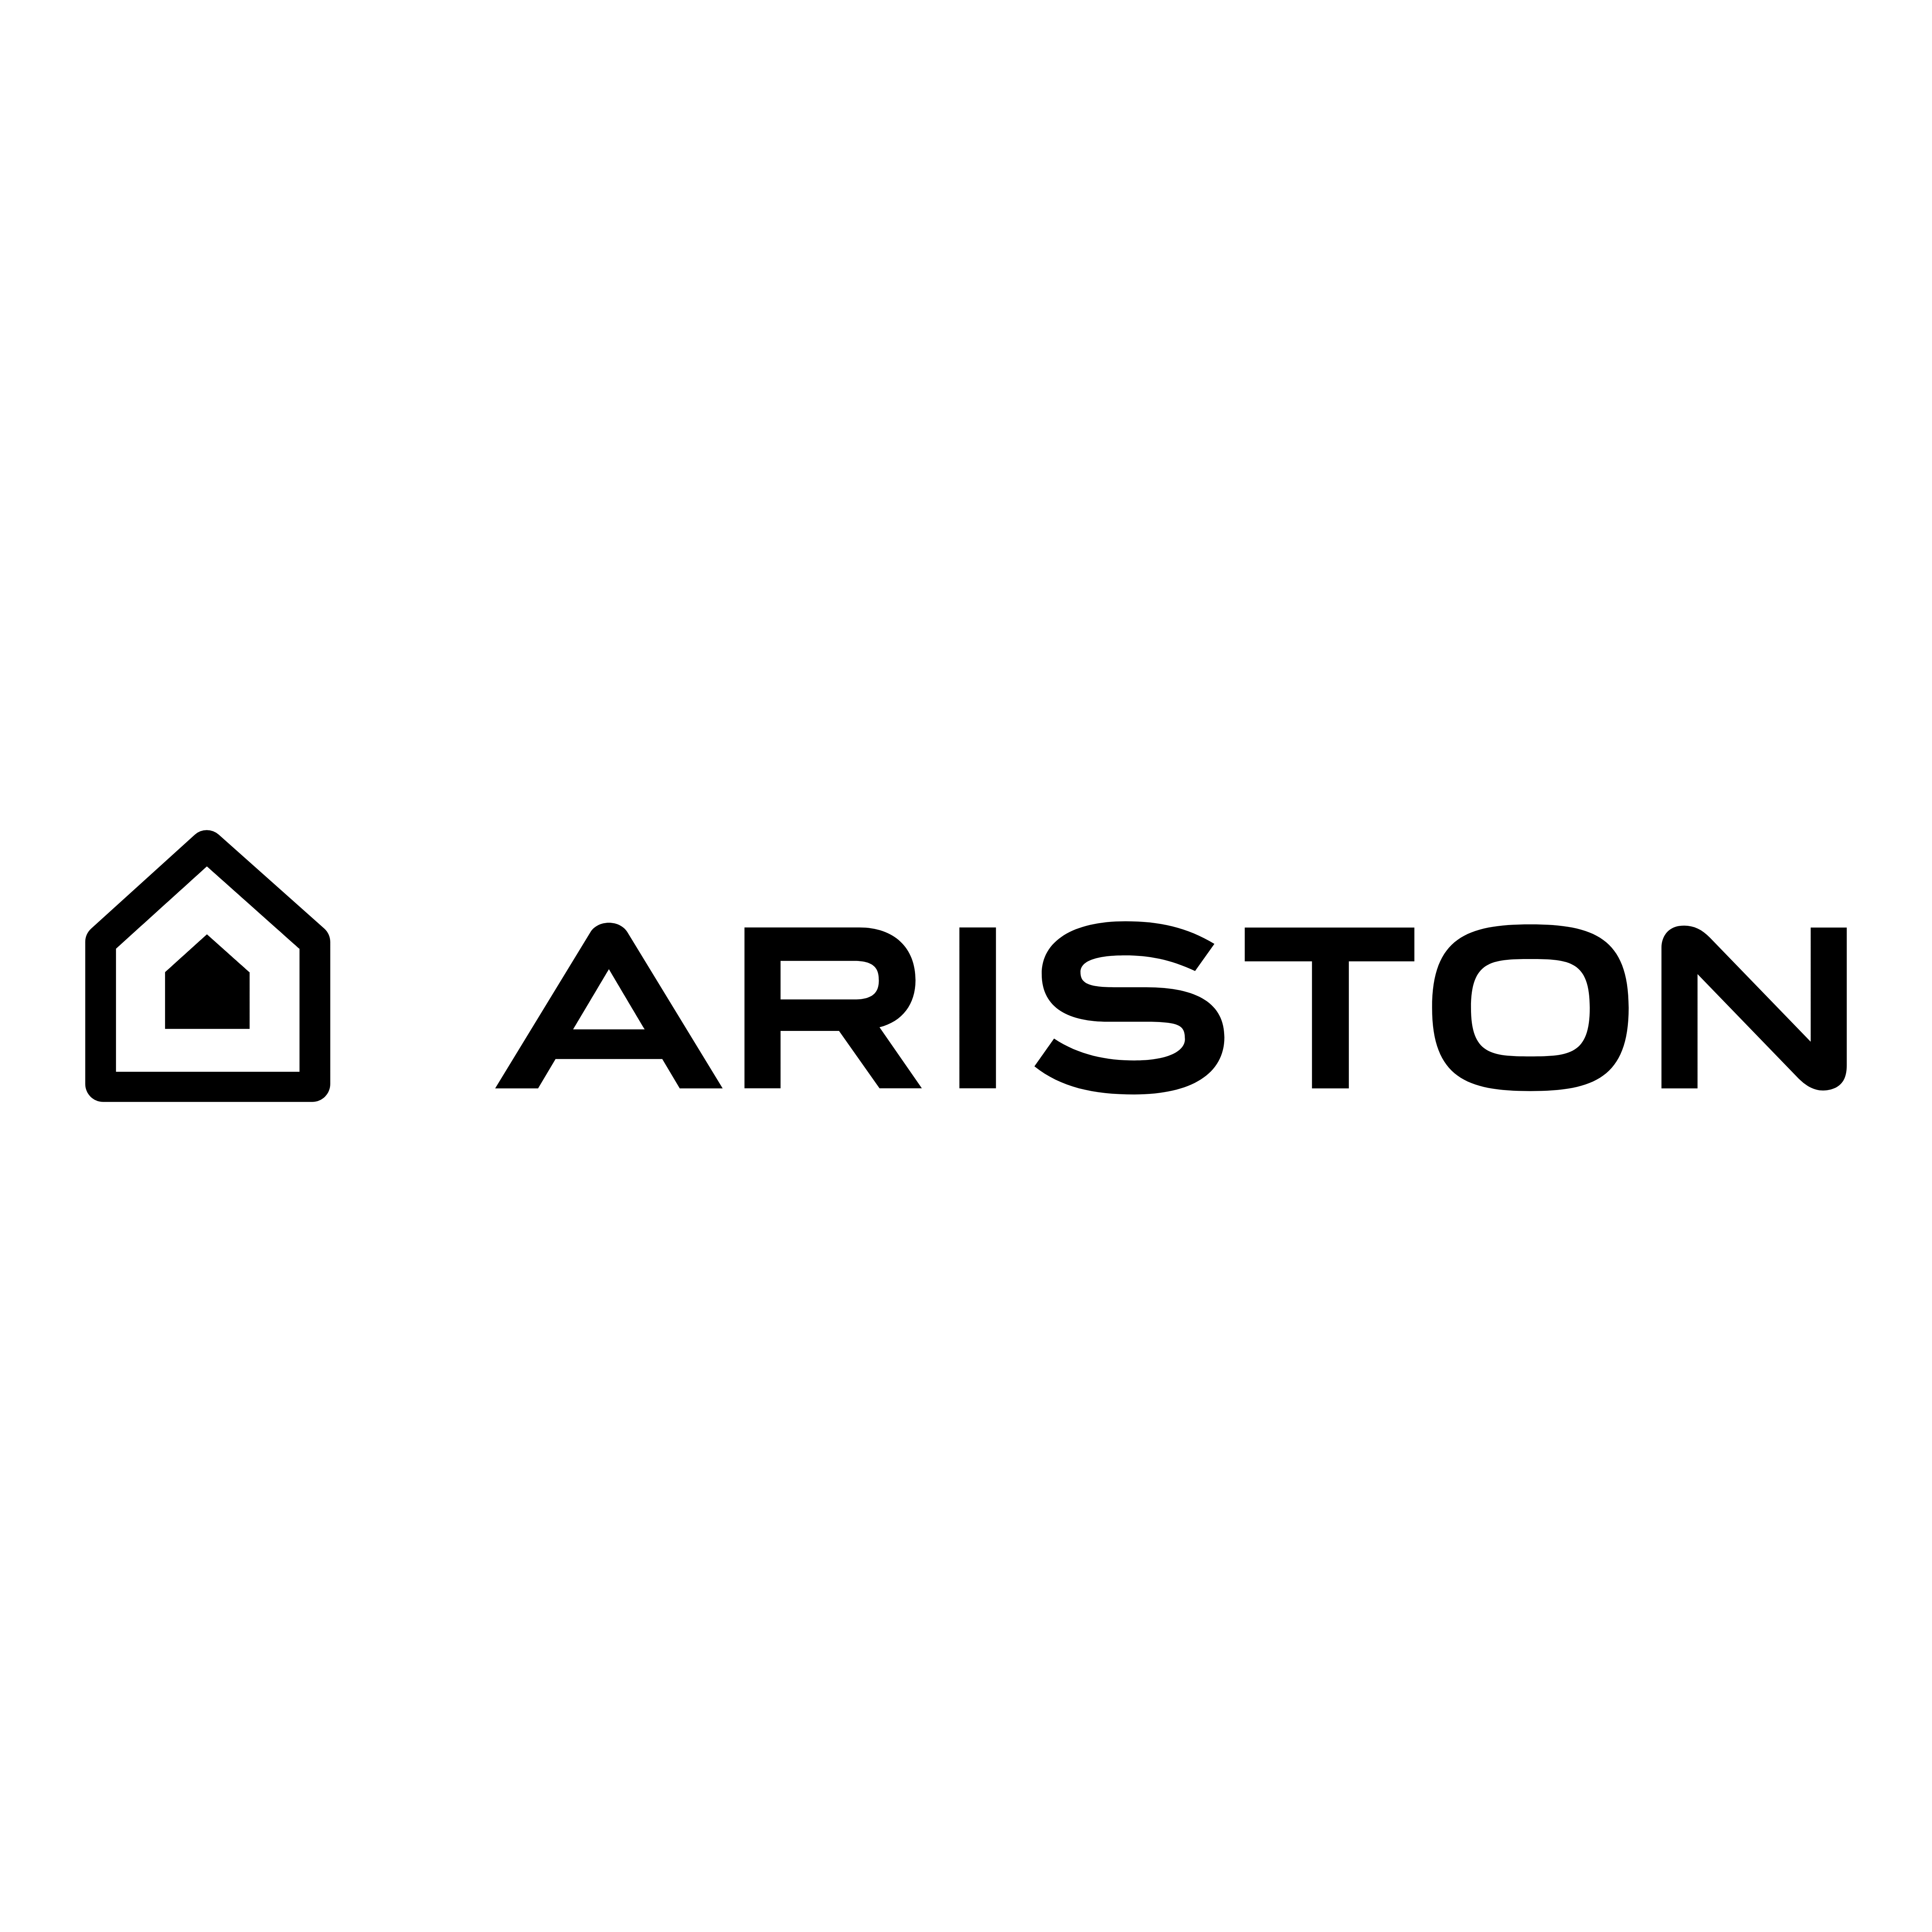 Hotpoint ariston значки. Хотпоинт Аристон лого. Ariston котел лого. Ariston Thermo Group logo. Логотип Ariston в векторе.